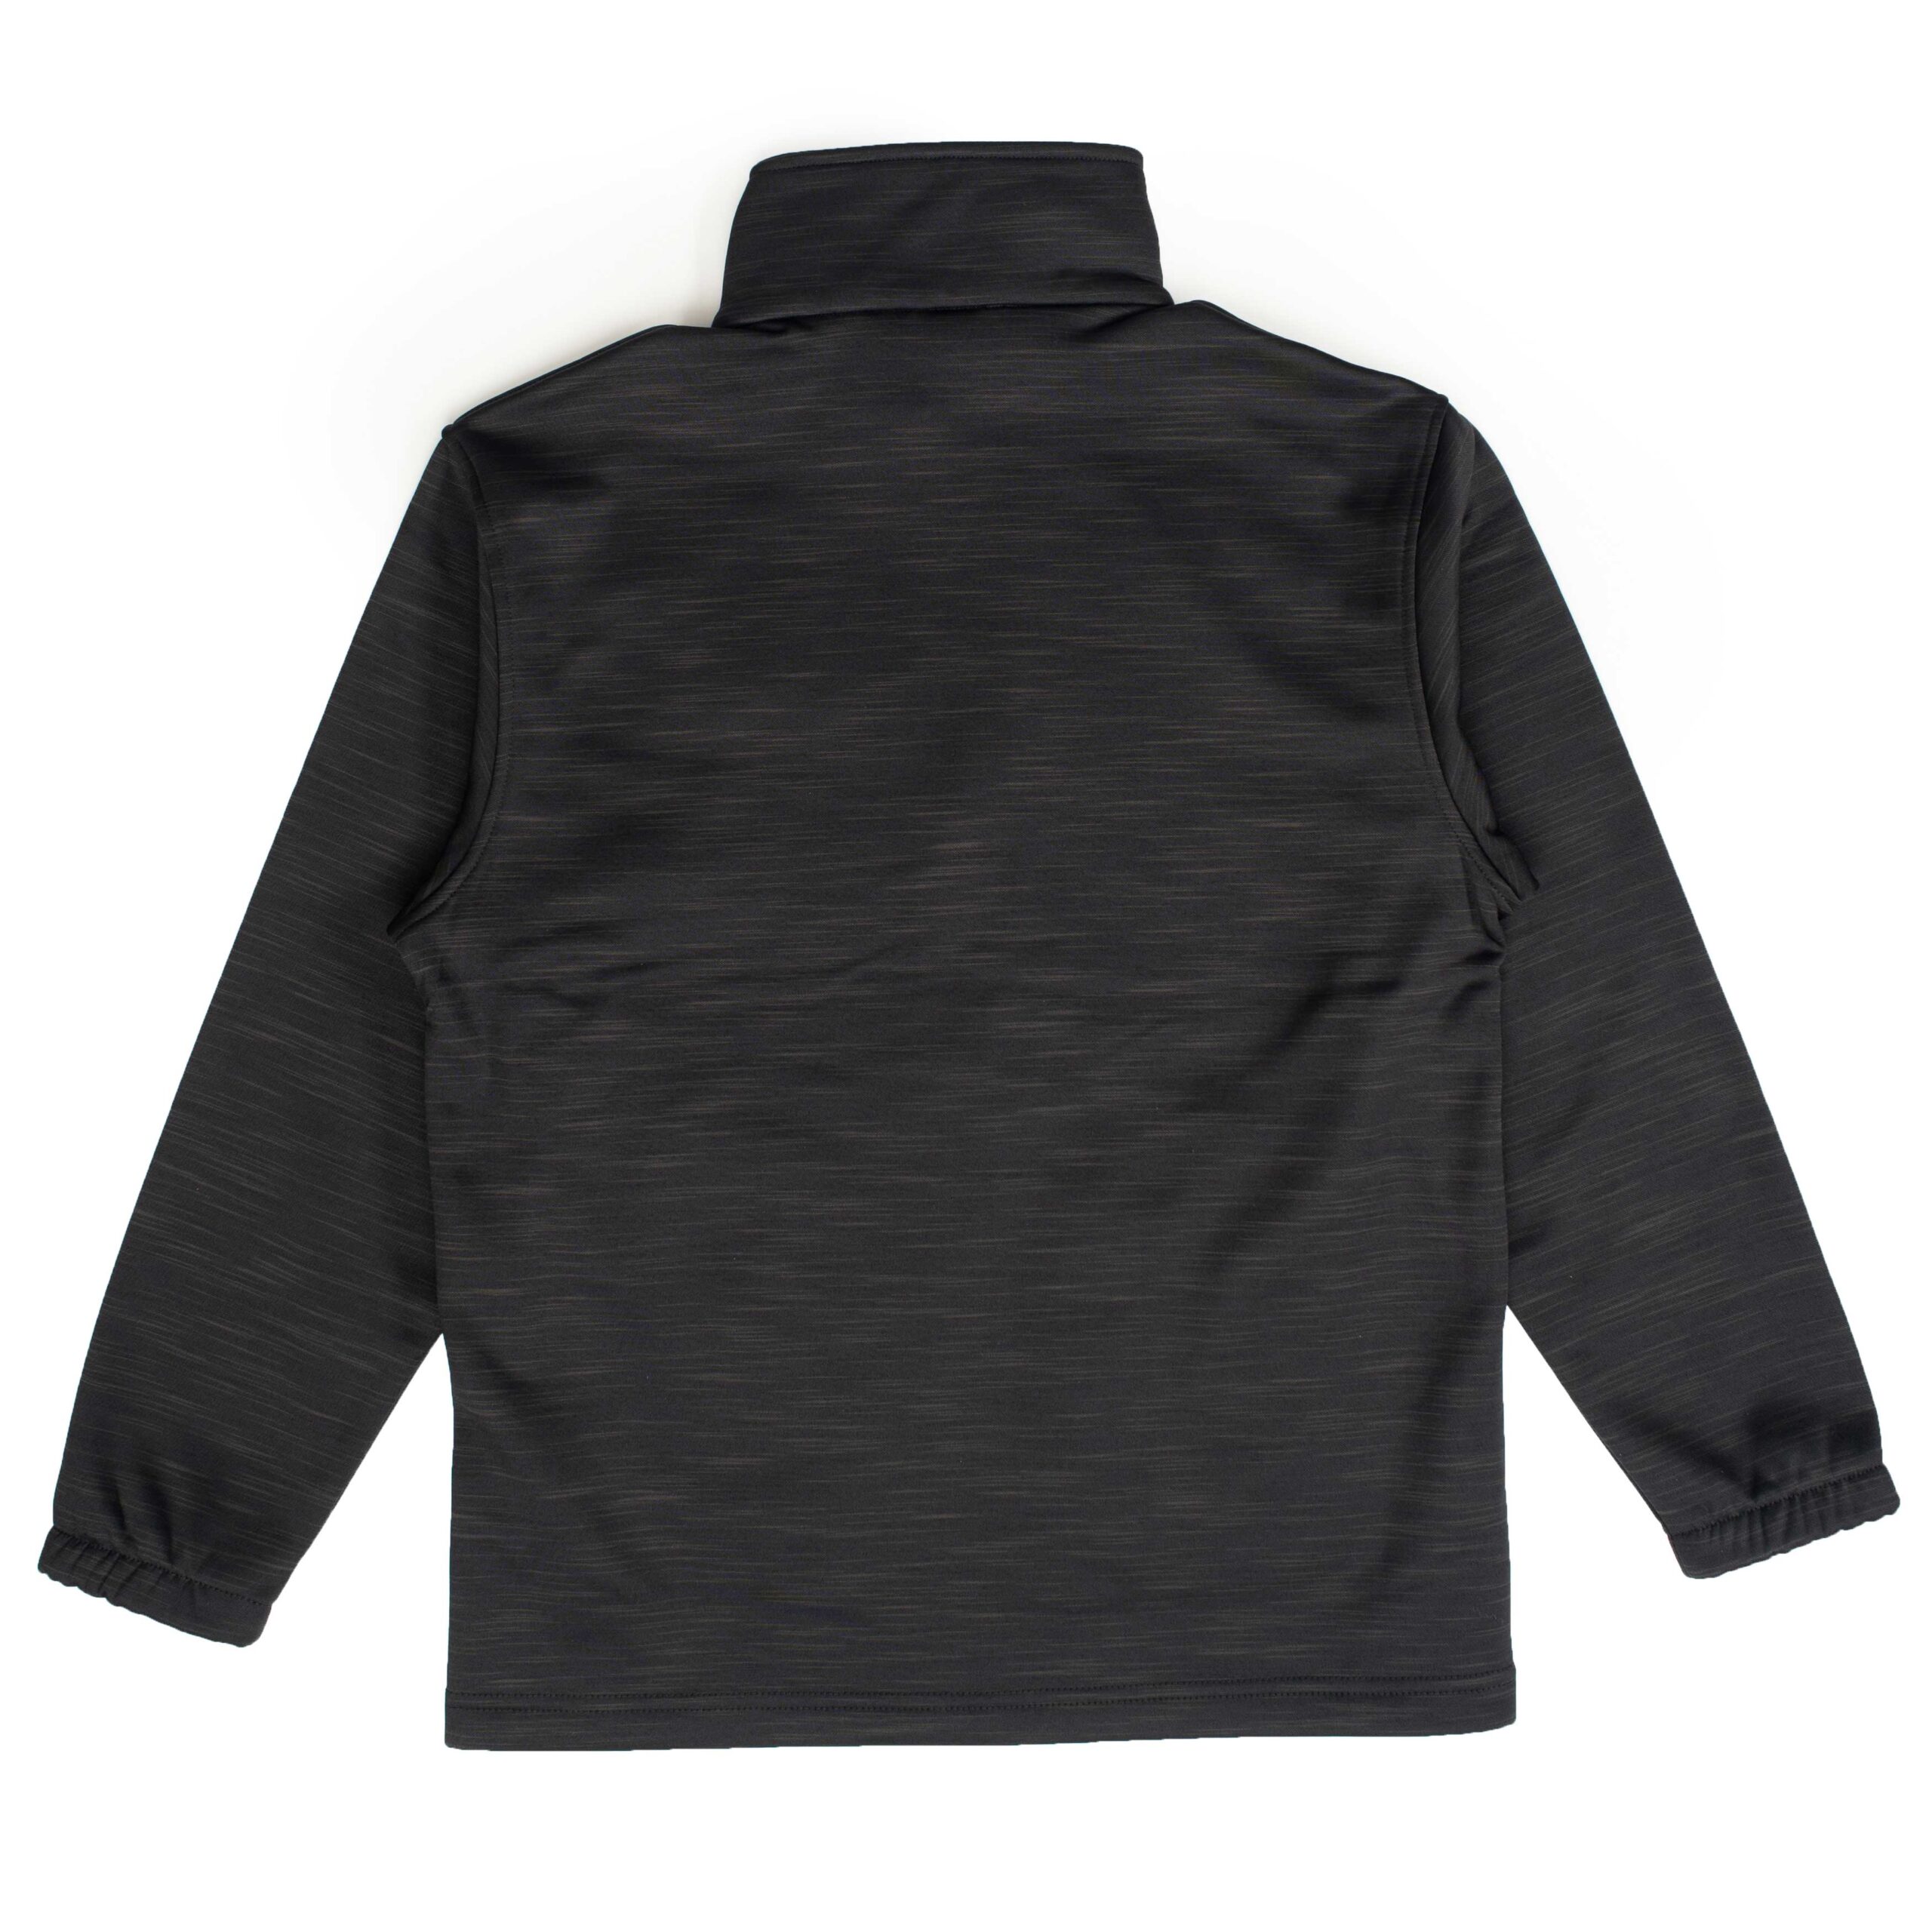 Full Zip Jacket - Black - USW Steelworker Store